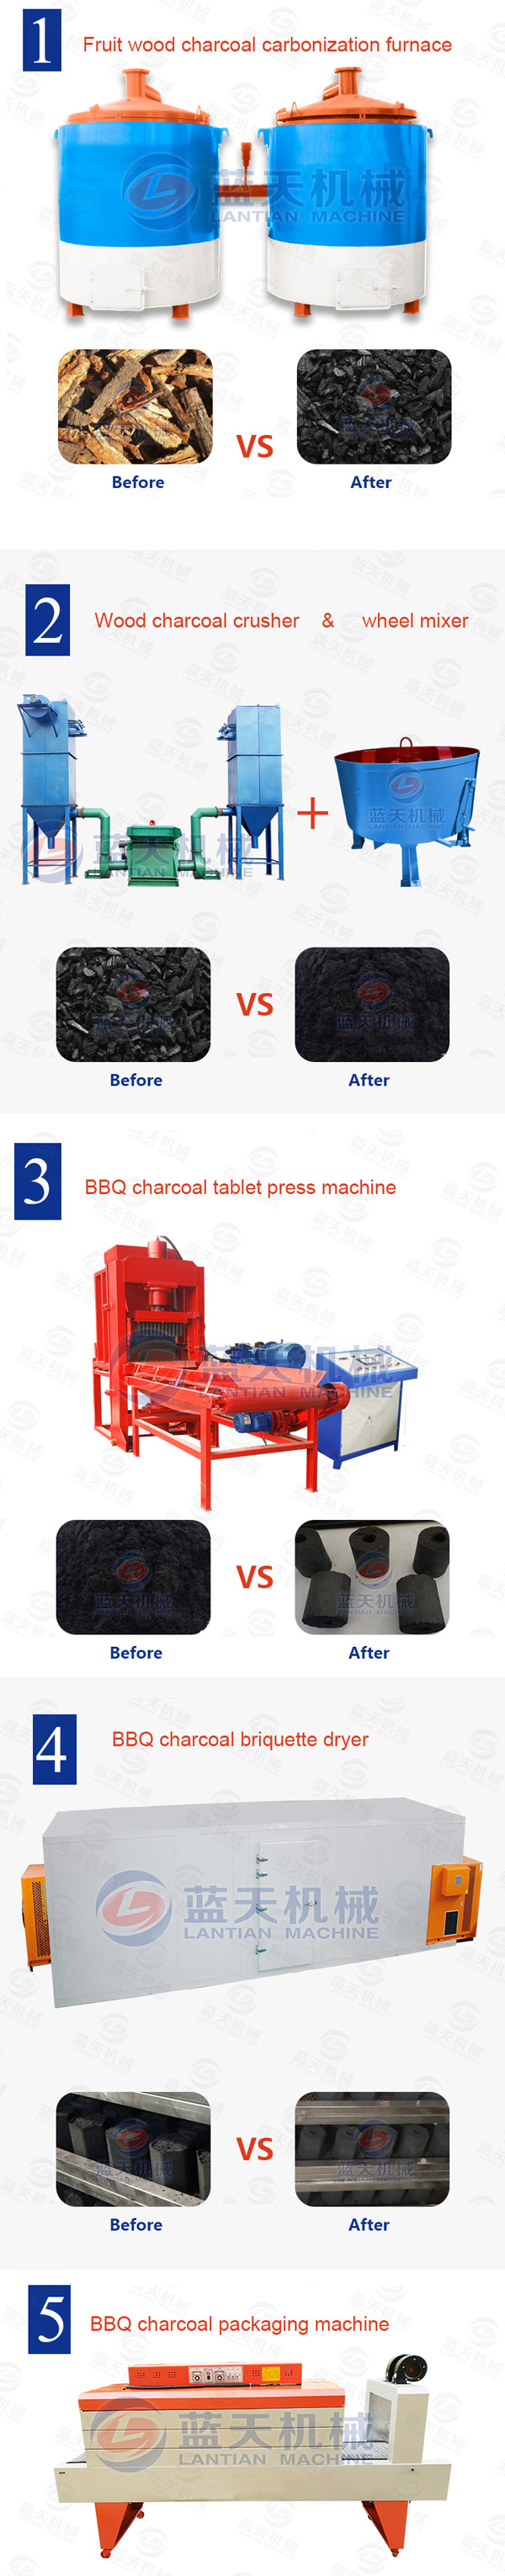 BBQ charcoal tablets equipment